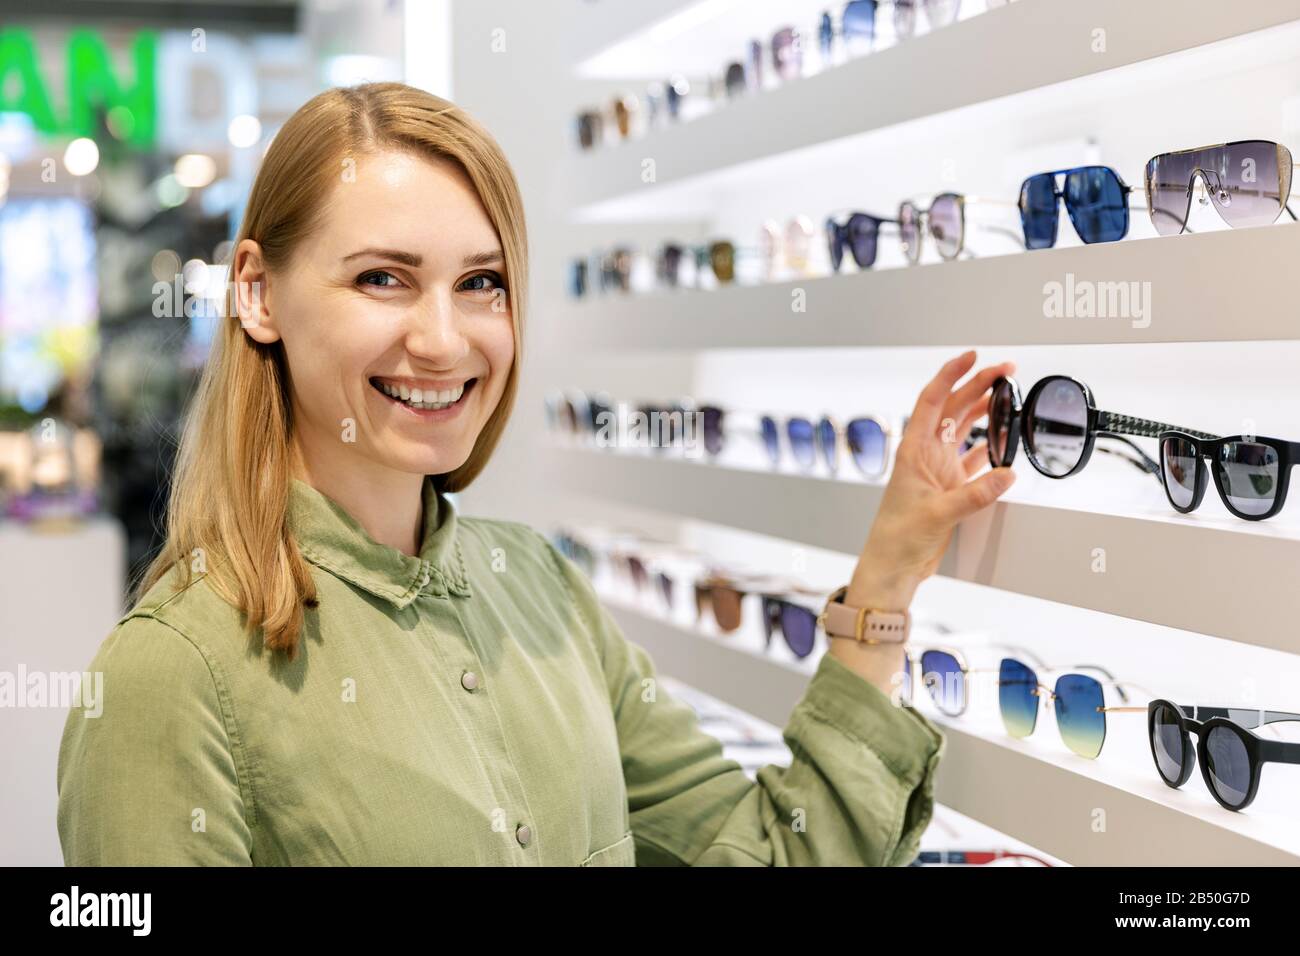 smiling woman choosing sunglasses from shelf in eyewear store Stock Photo